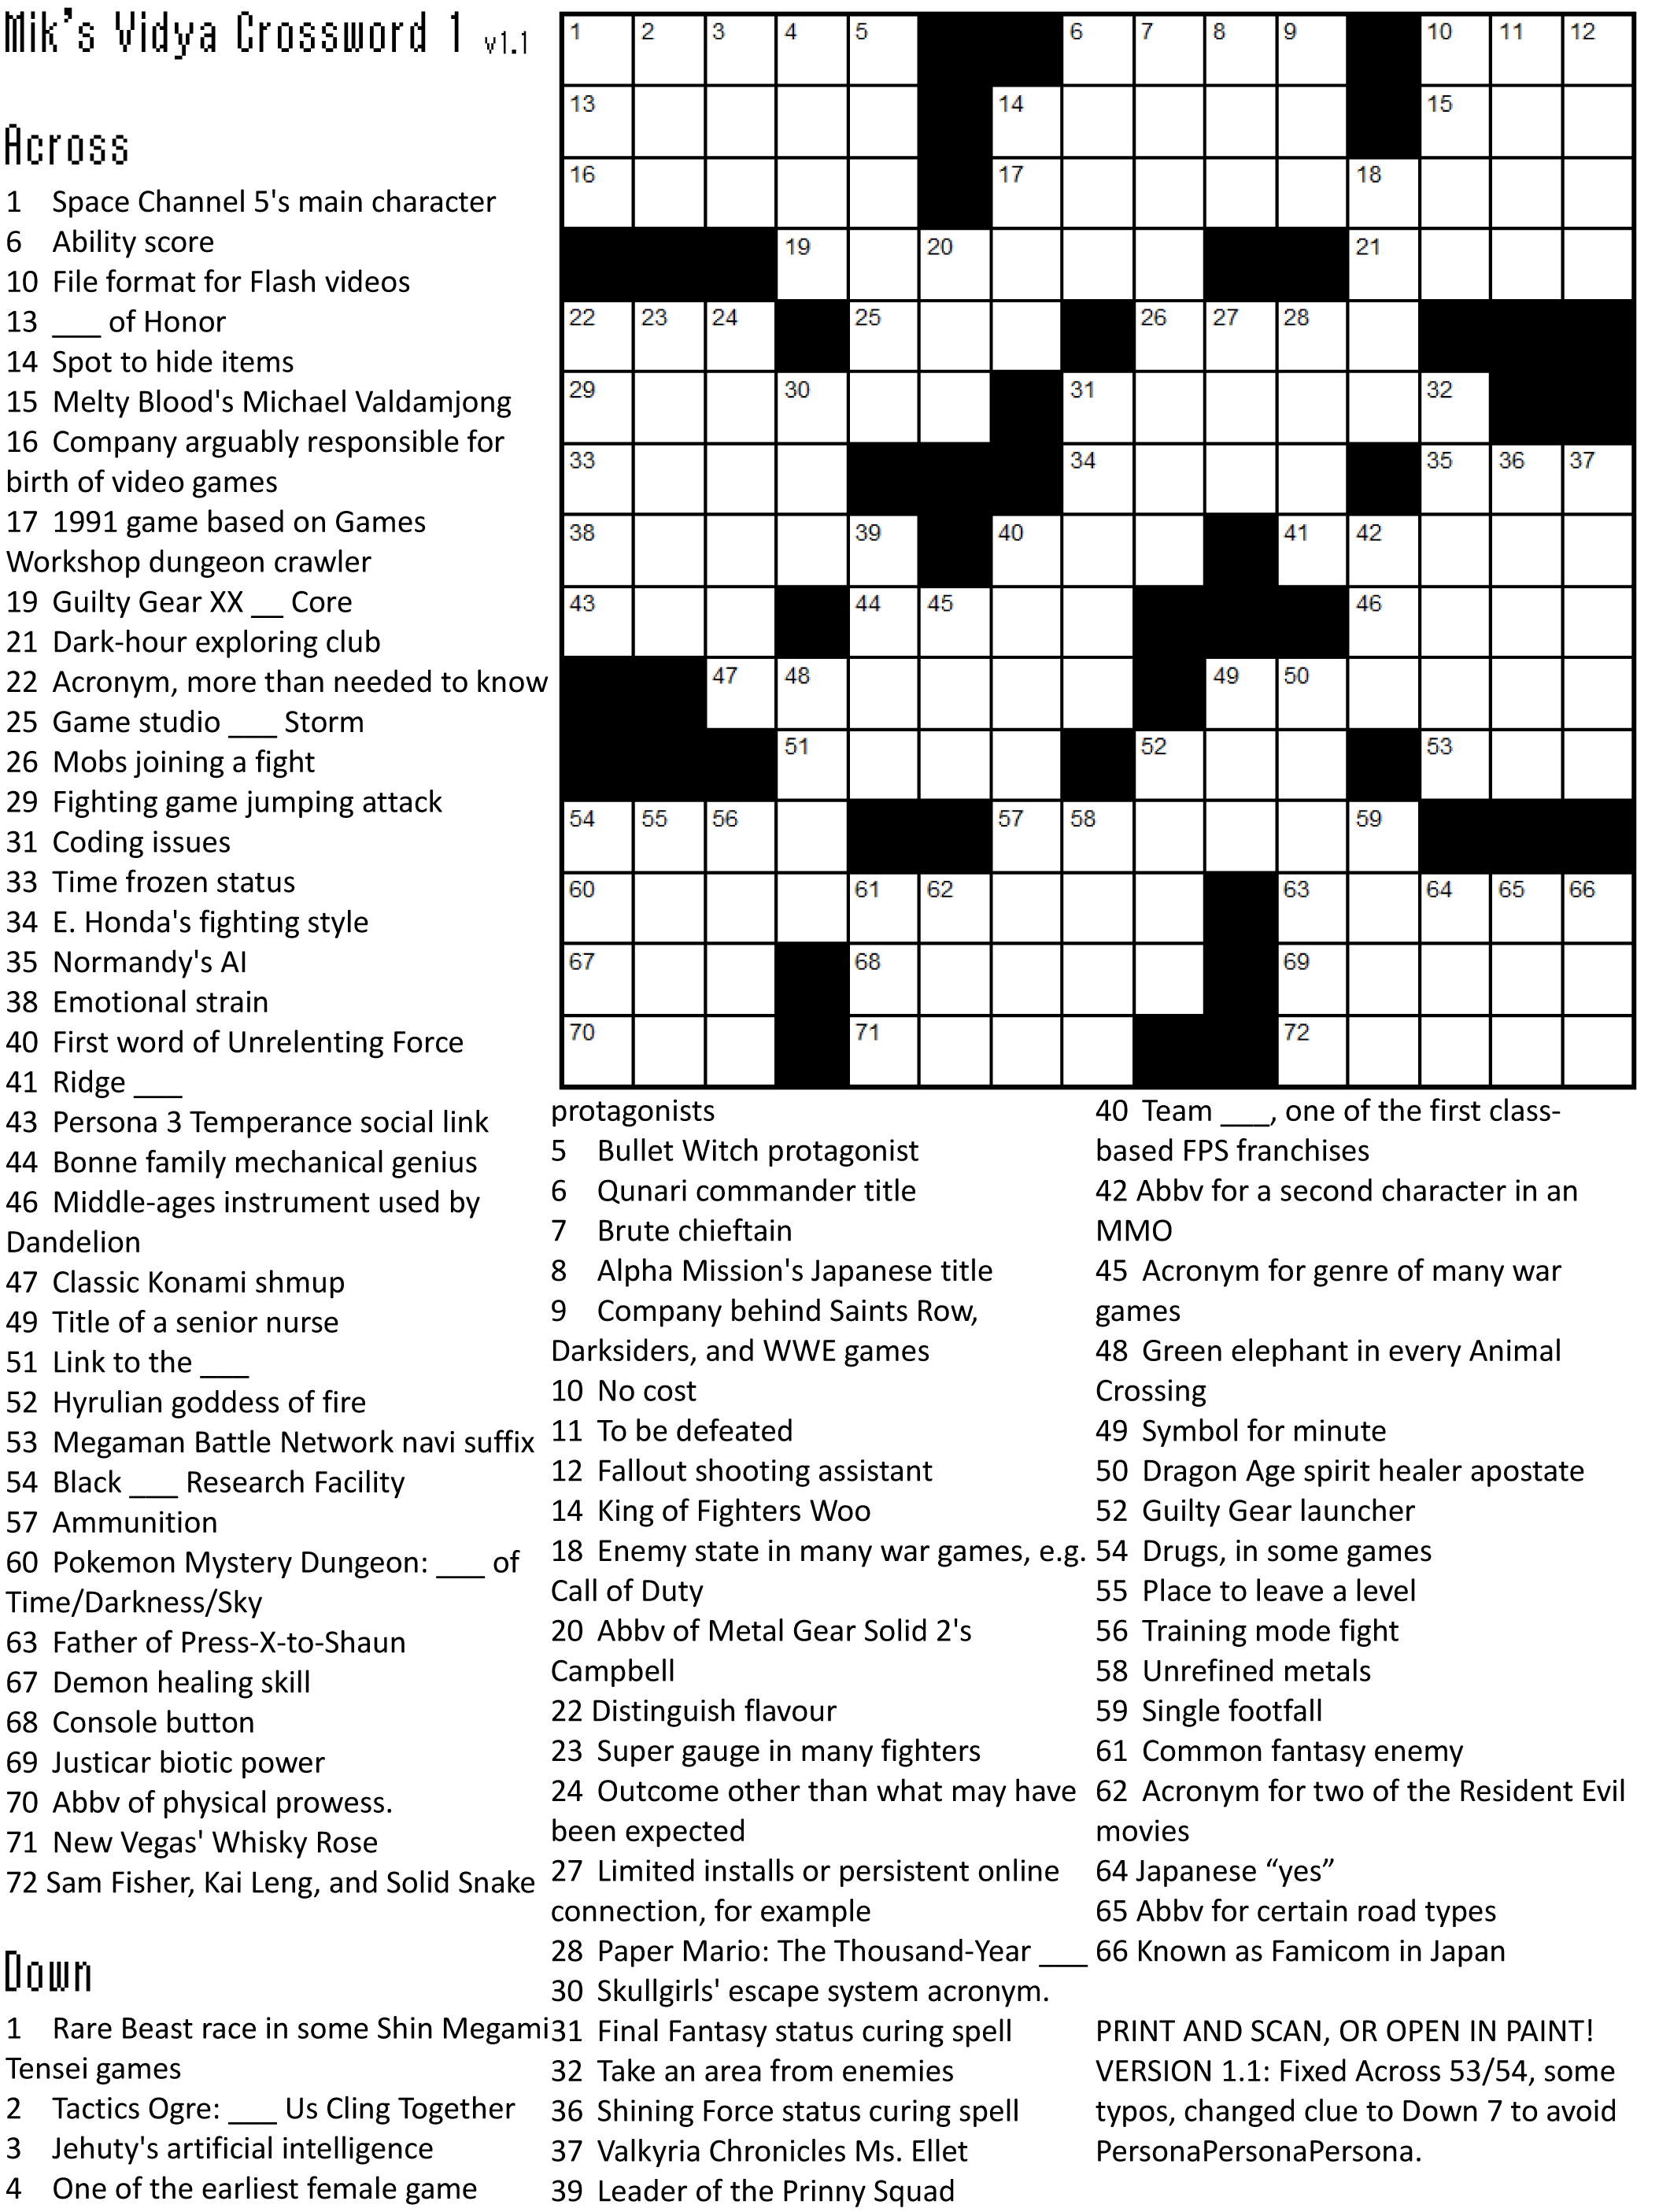 boatload crossword puzzle